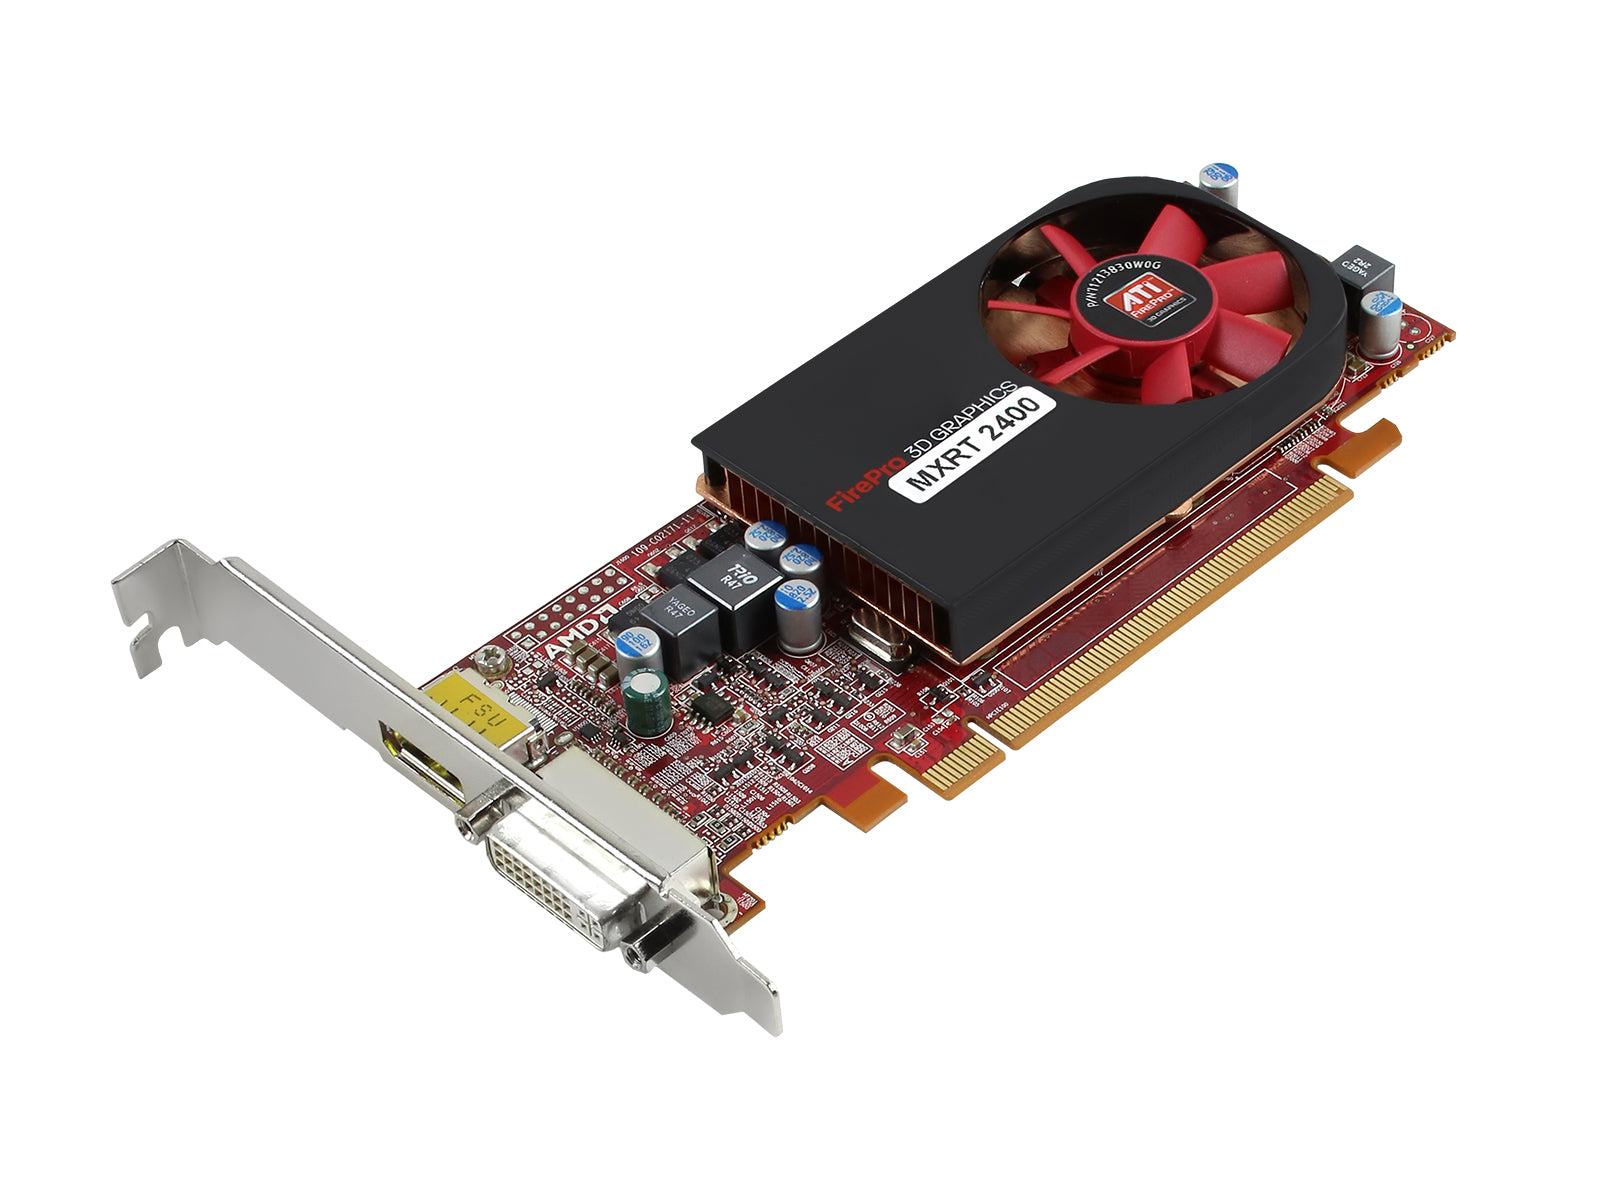 Barco MXRT-2400 512MB PCIe Graphic Card (K9305035) Monitors.com 